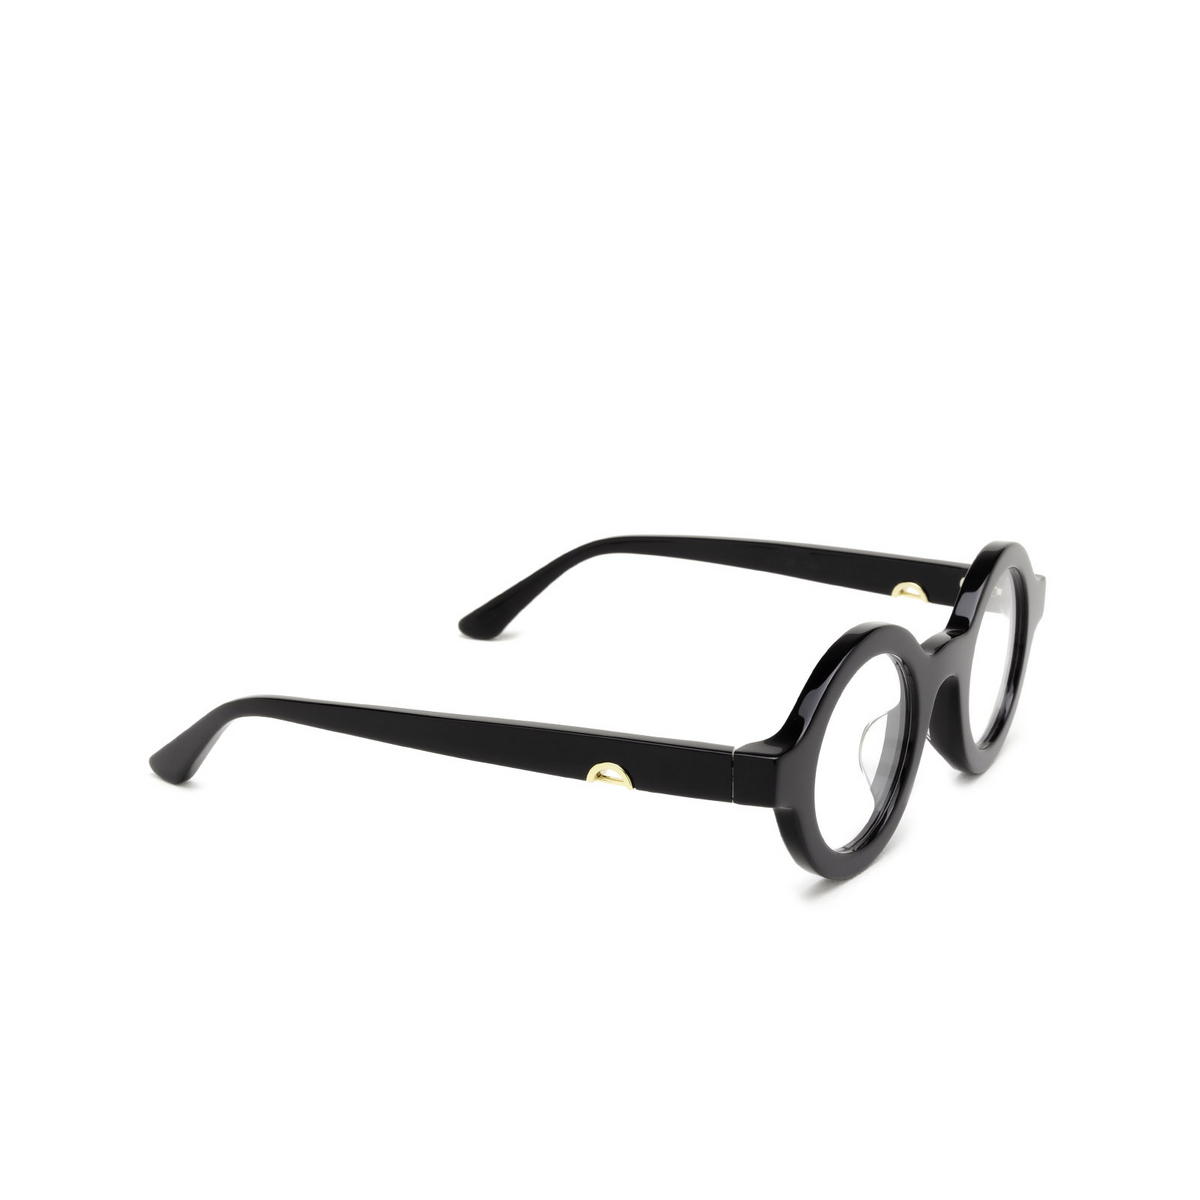 Huma® Round Eyeglasses: Myo Optical color Black 06 - three-quarters view.